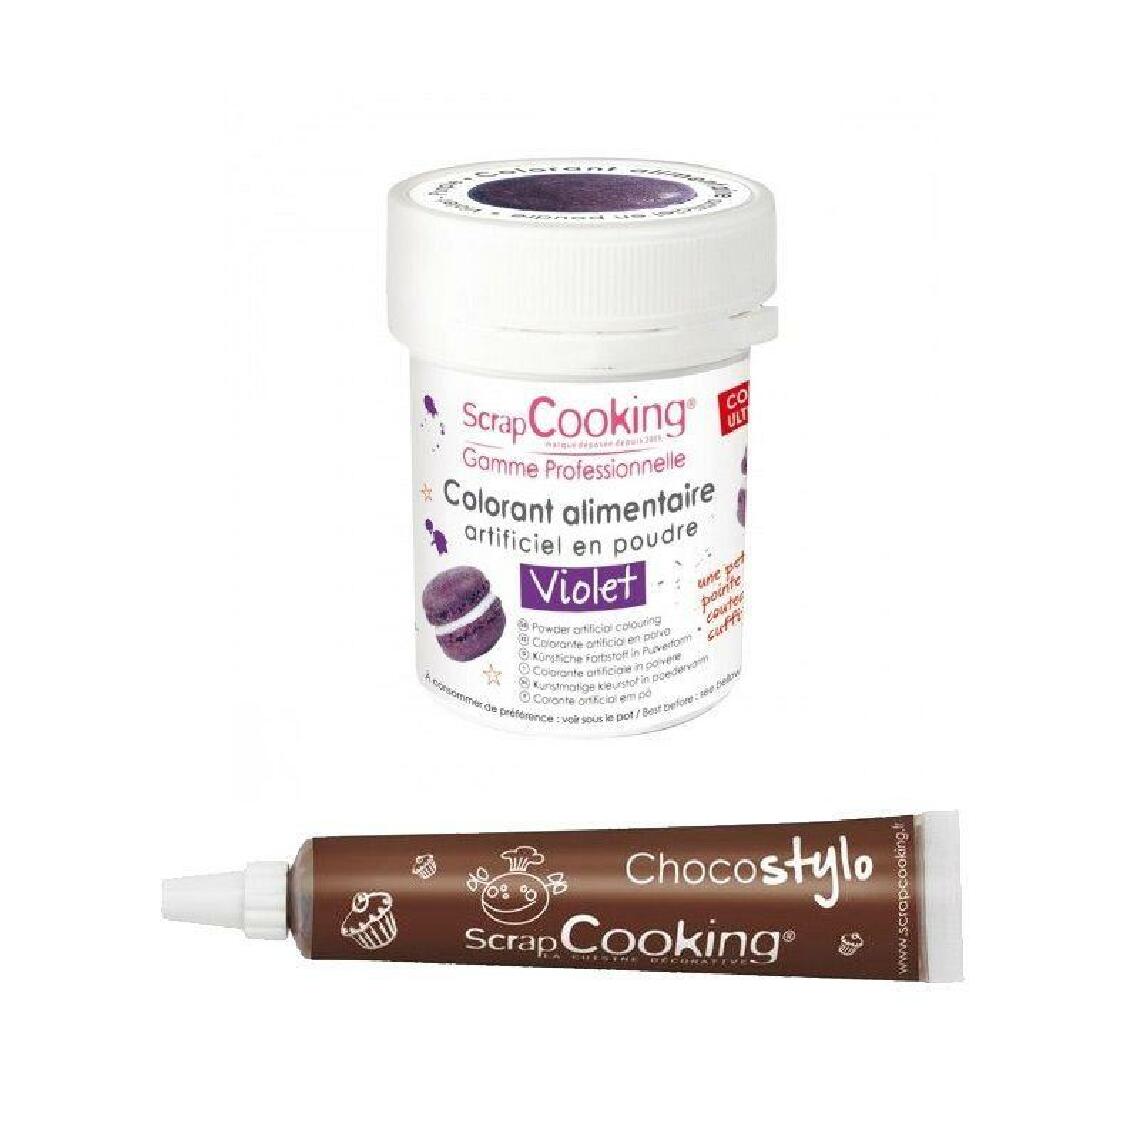 Scrapcooking - Stylo chocolat + Colorant alimentaire Violet - Kits créatifs